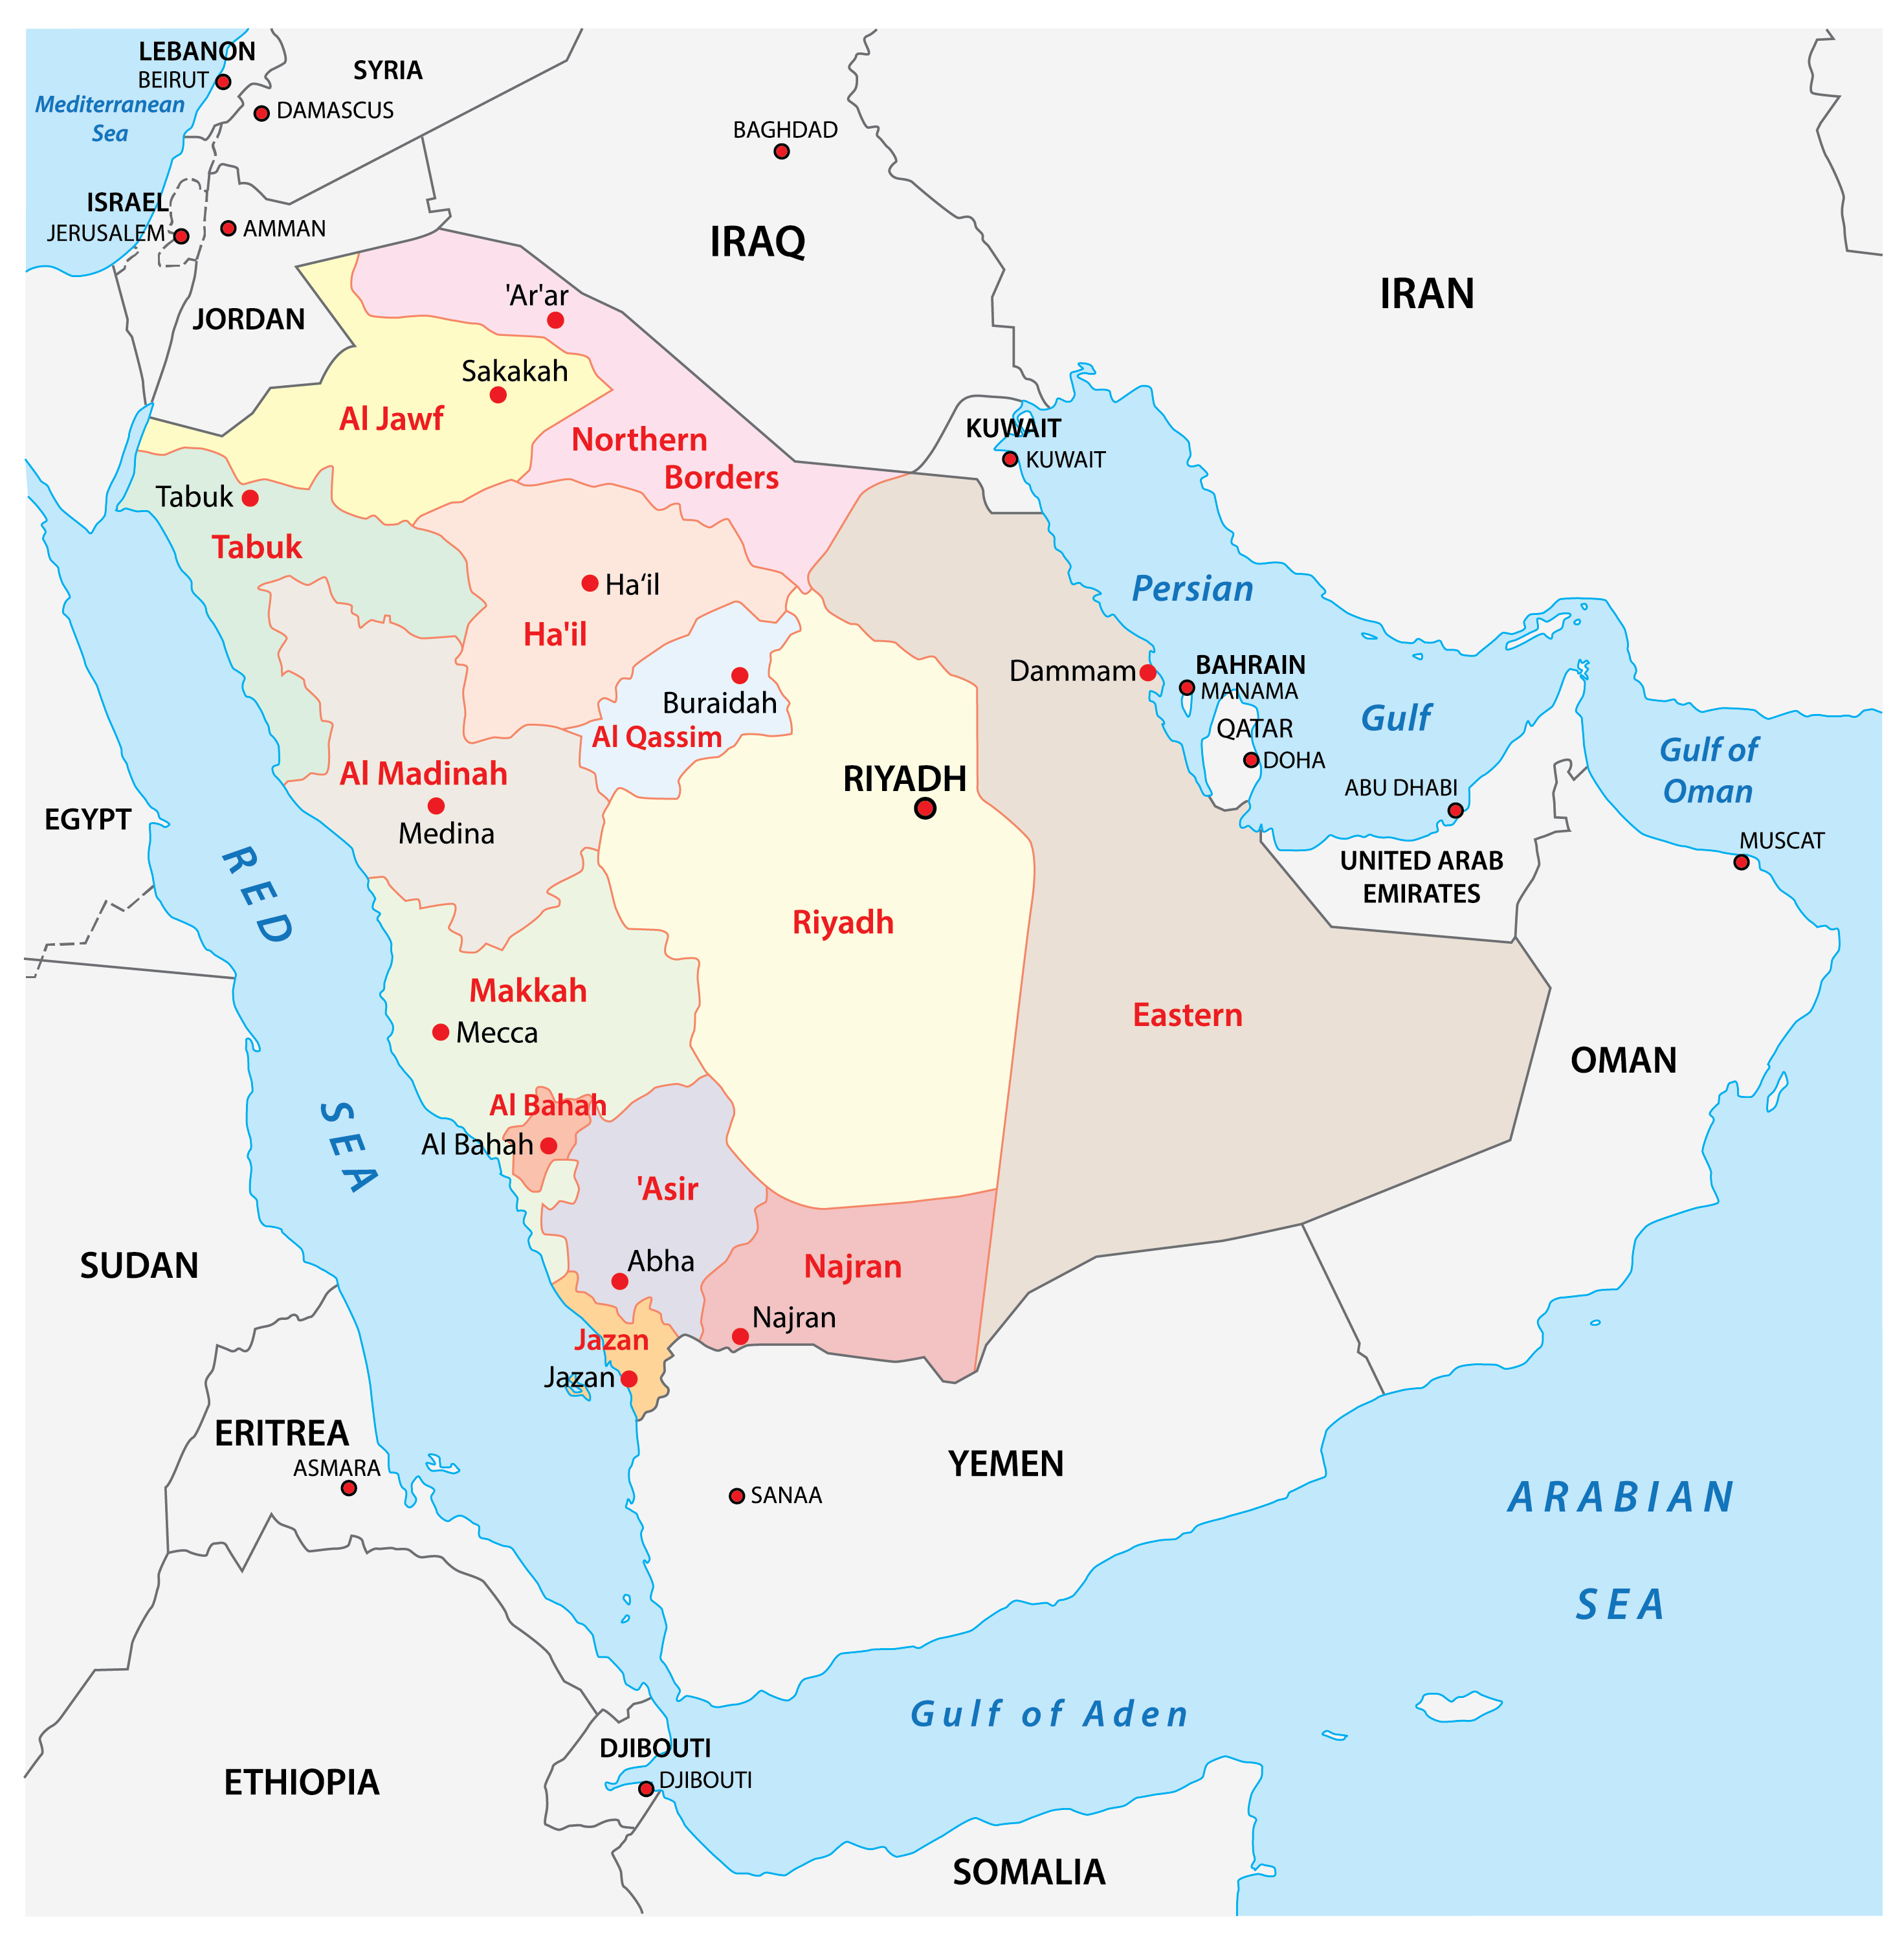 Saudi Arabia Maps & Facts - World Atlas